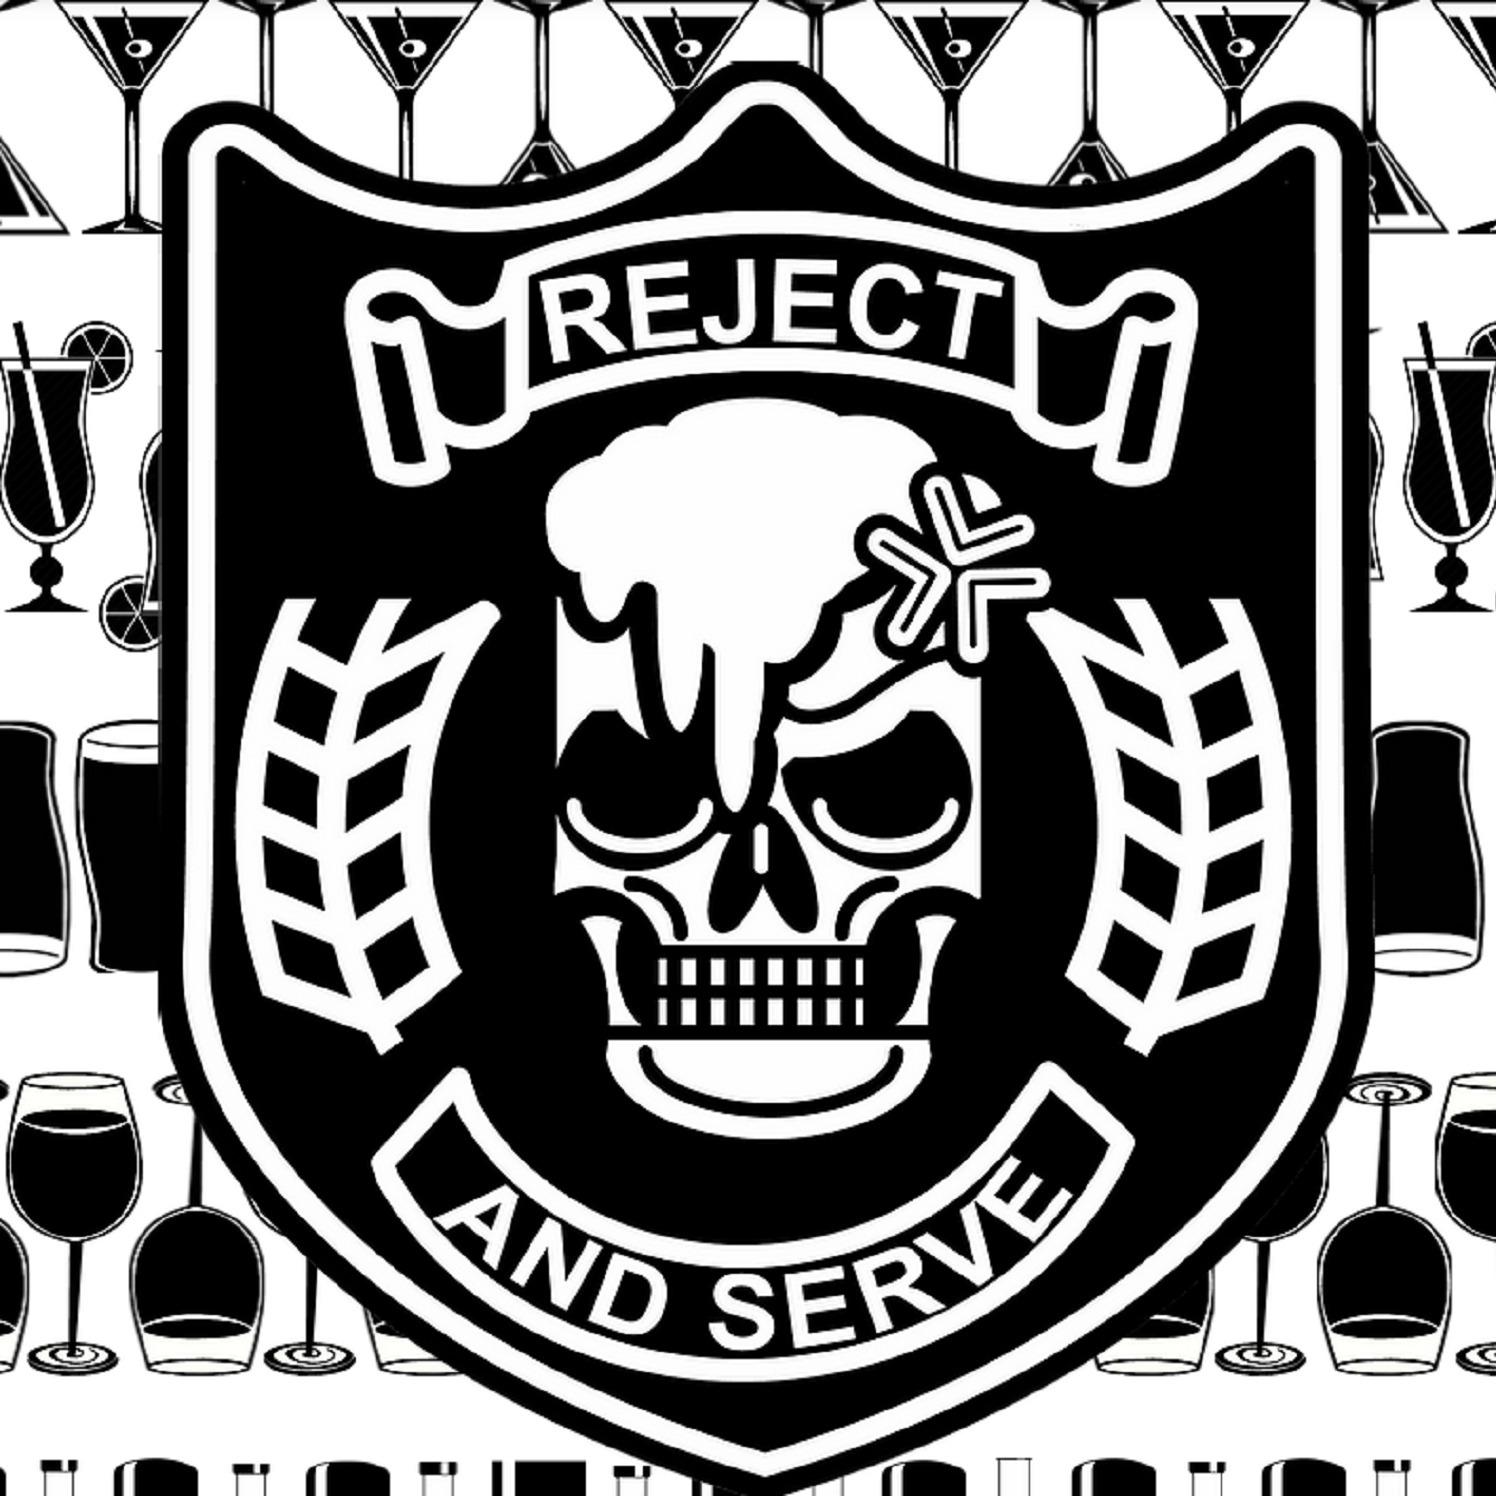 Reject & Serve Podcast